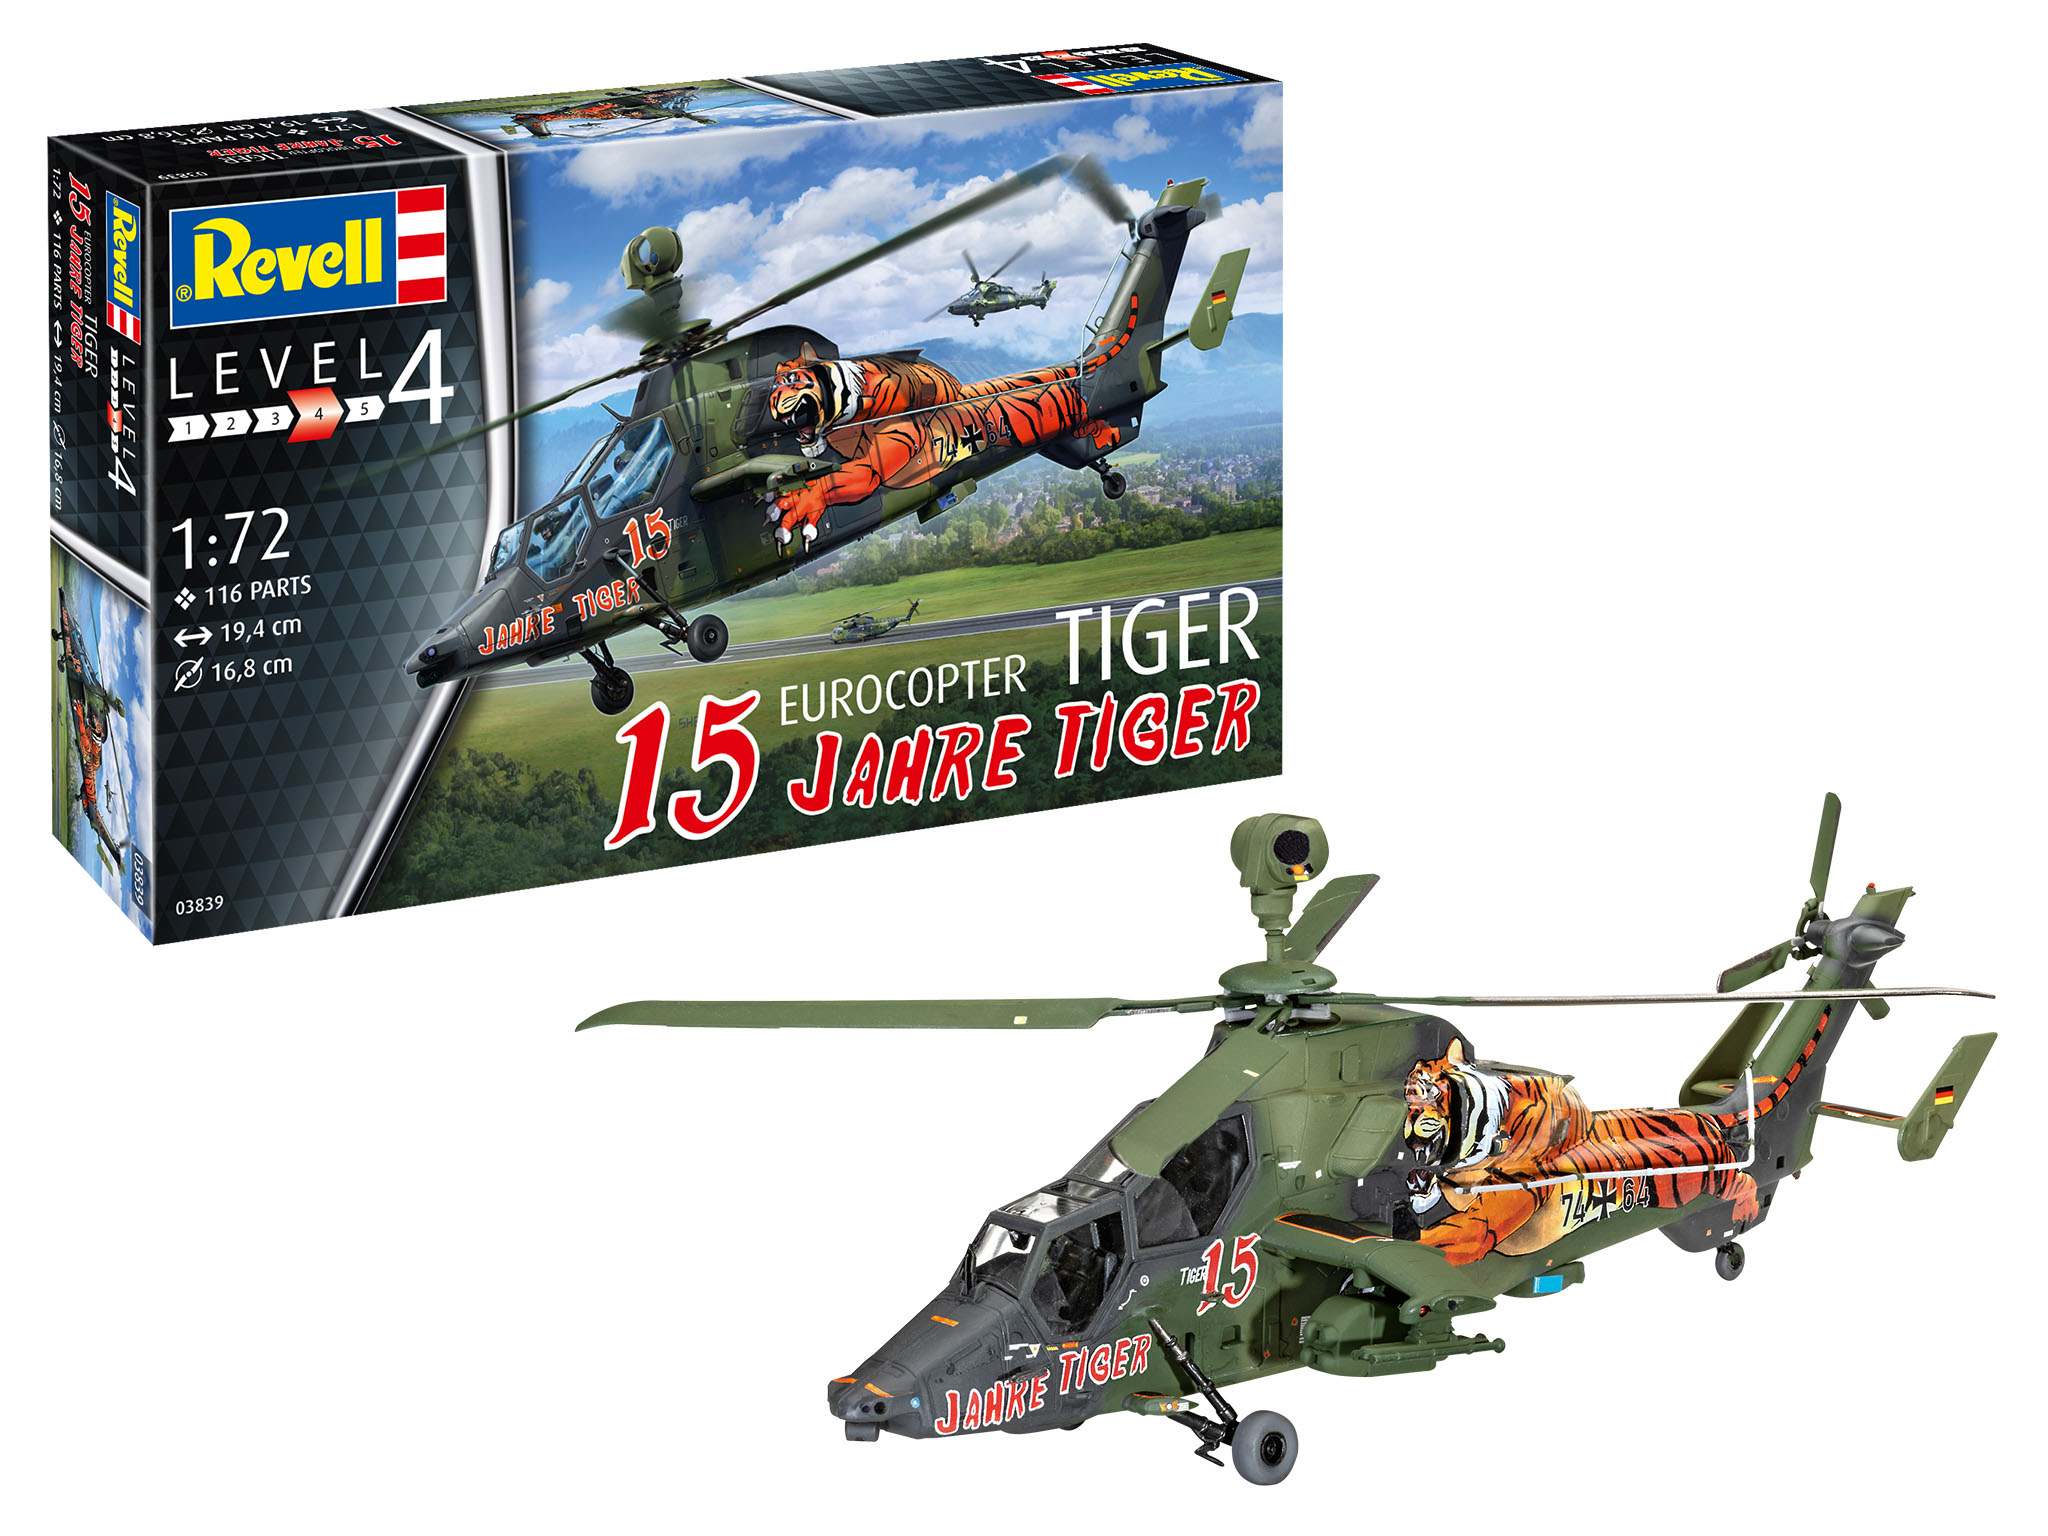 1:72 Eurocopter Tiger "15 Jahre Tiger"